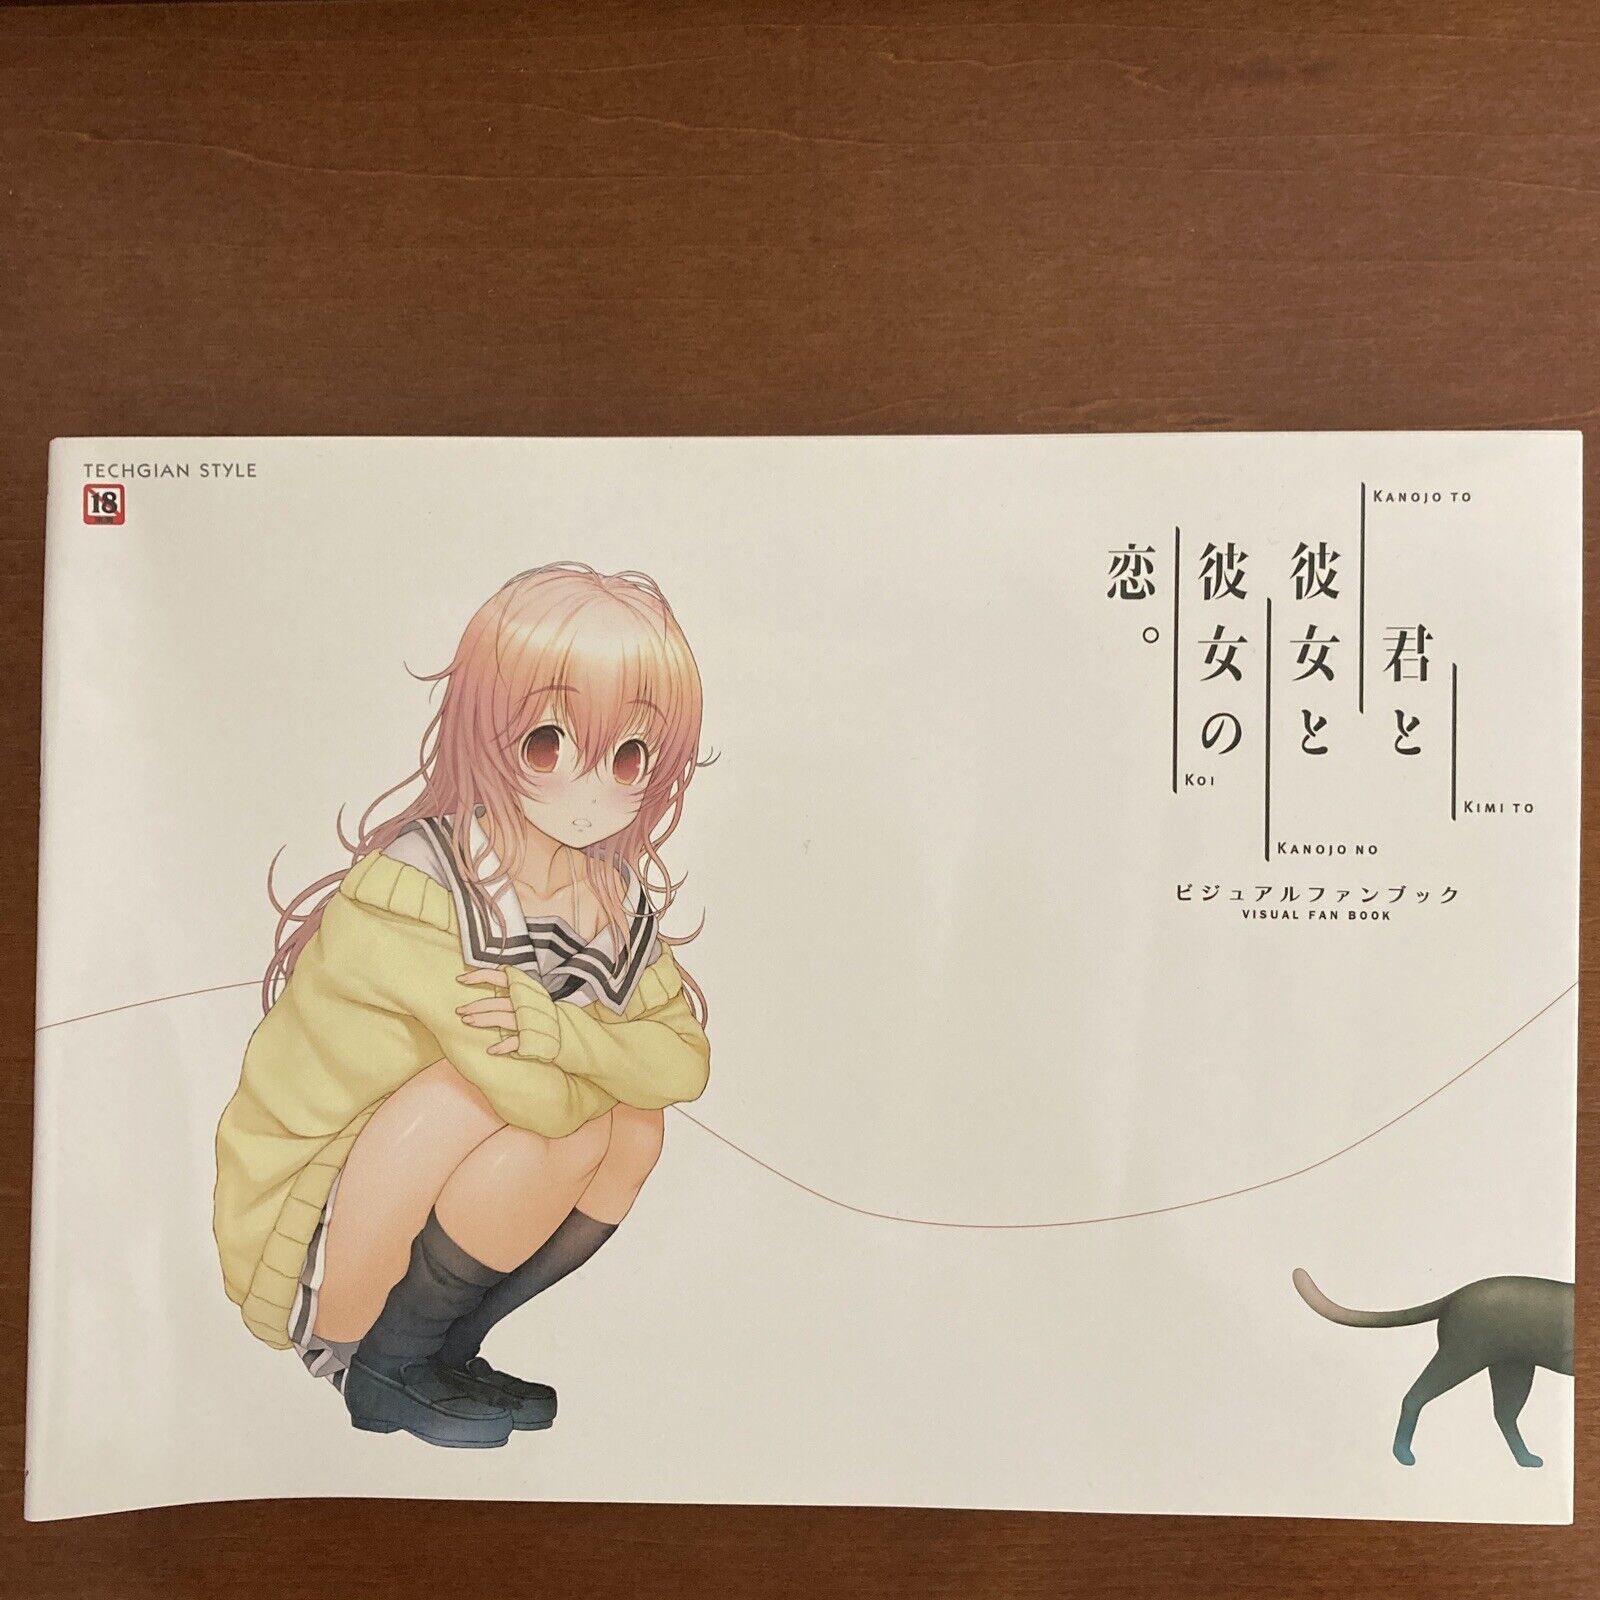 Kimi to Kanojo to Kanojo no Koi Visual Fan Book w/ Poster Art Book Illustration